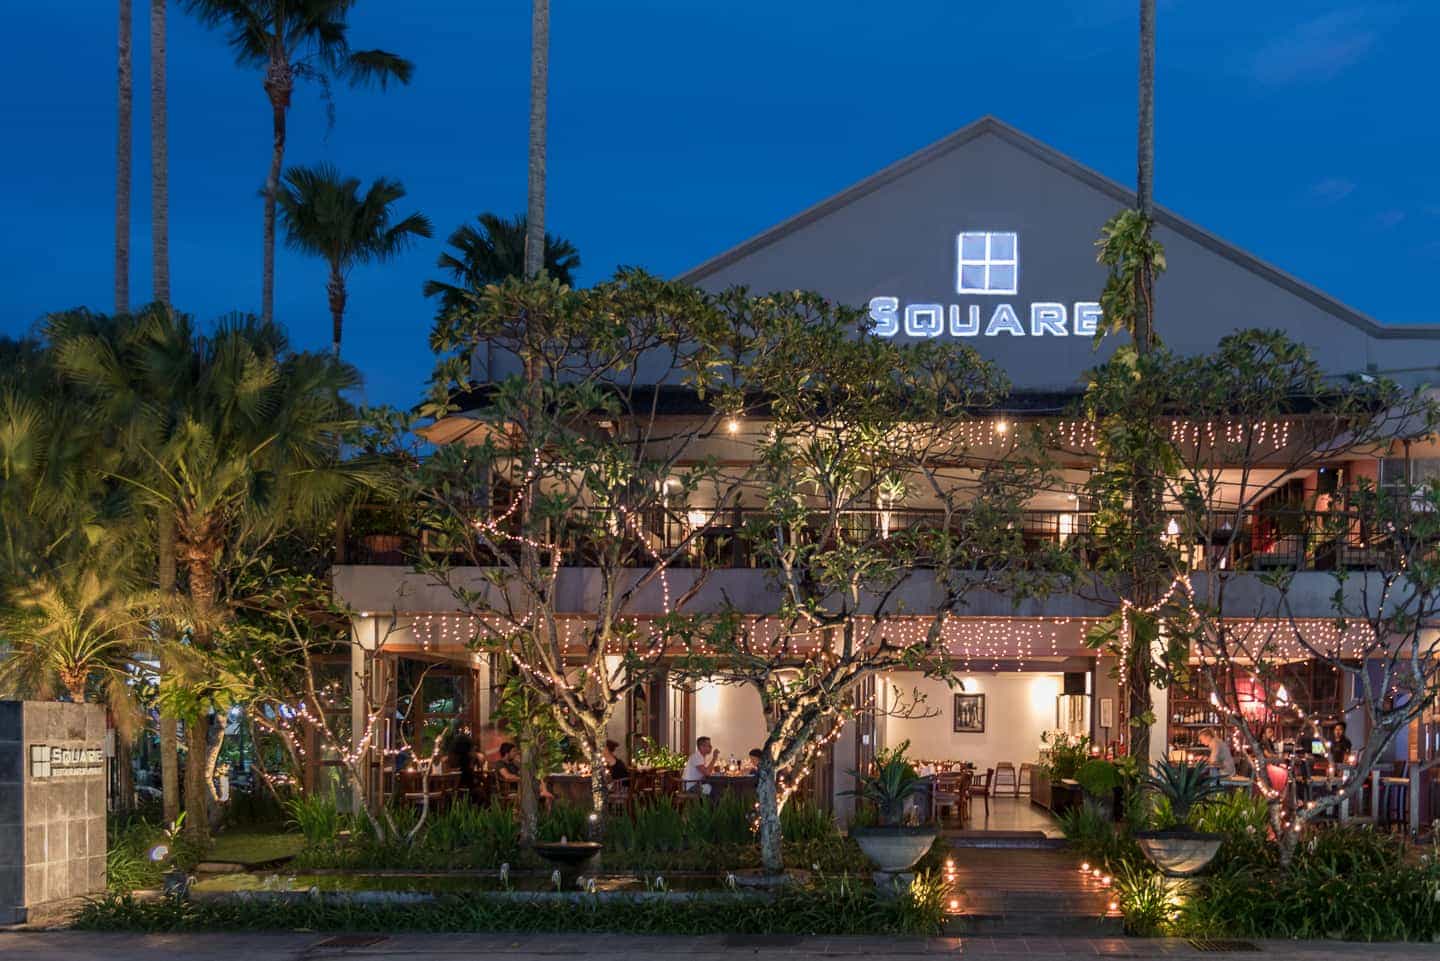 Square Restaurant and Lounge exterior photos